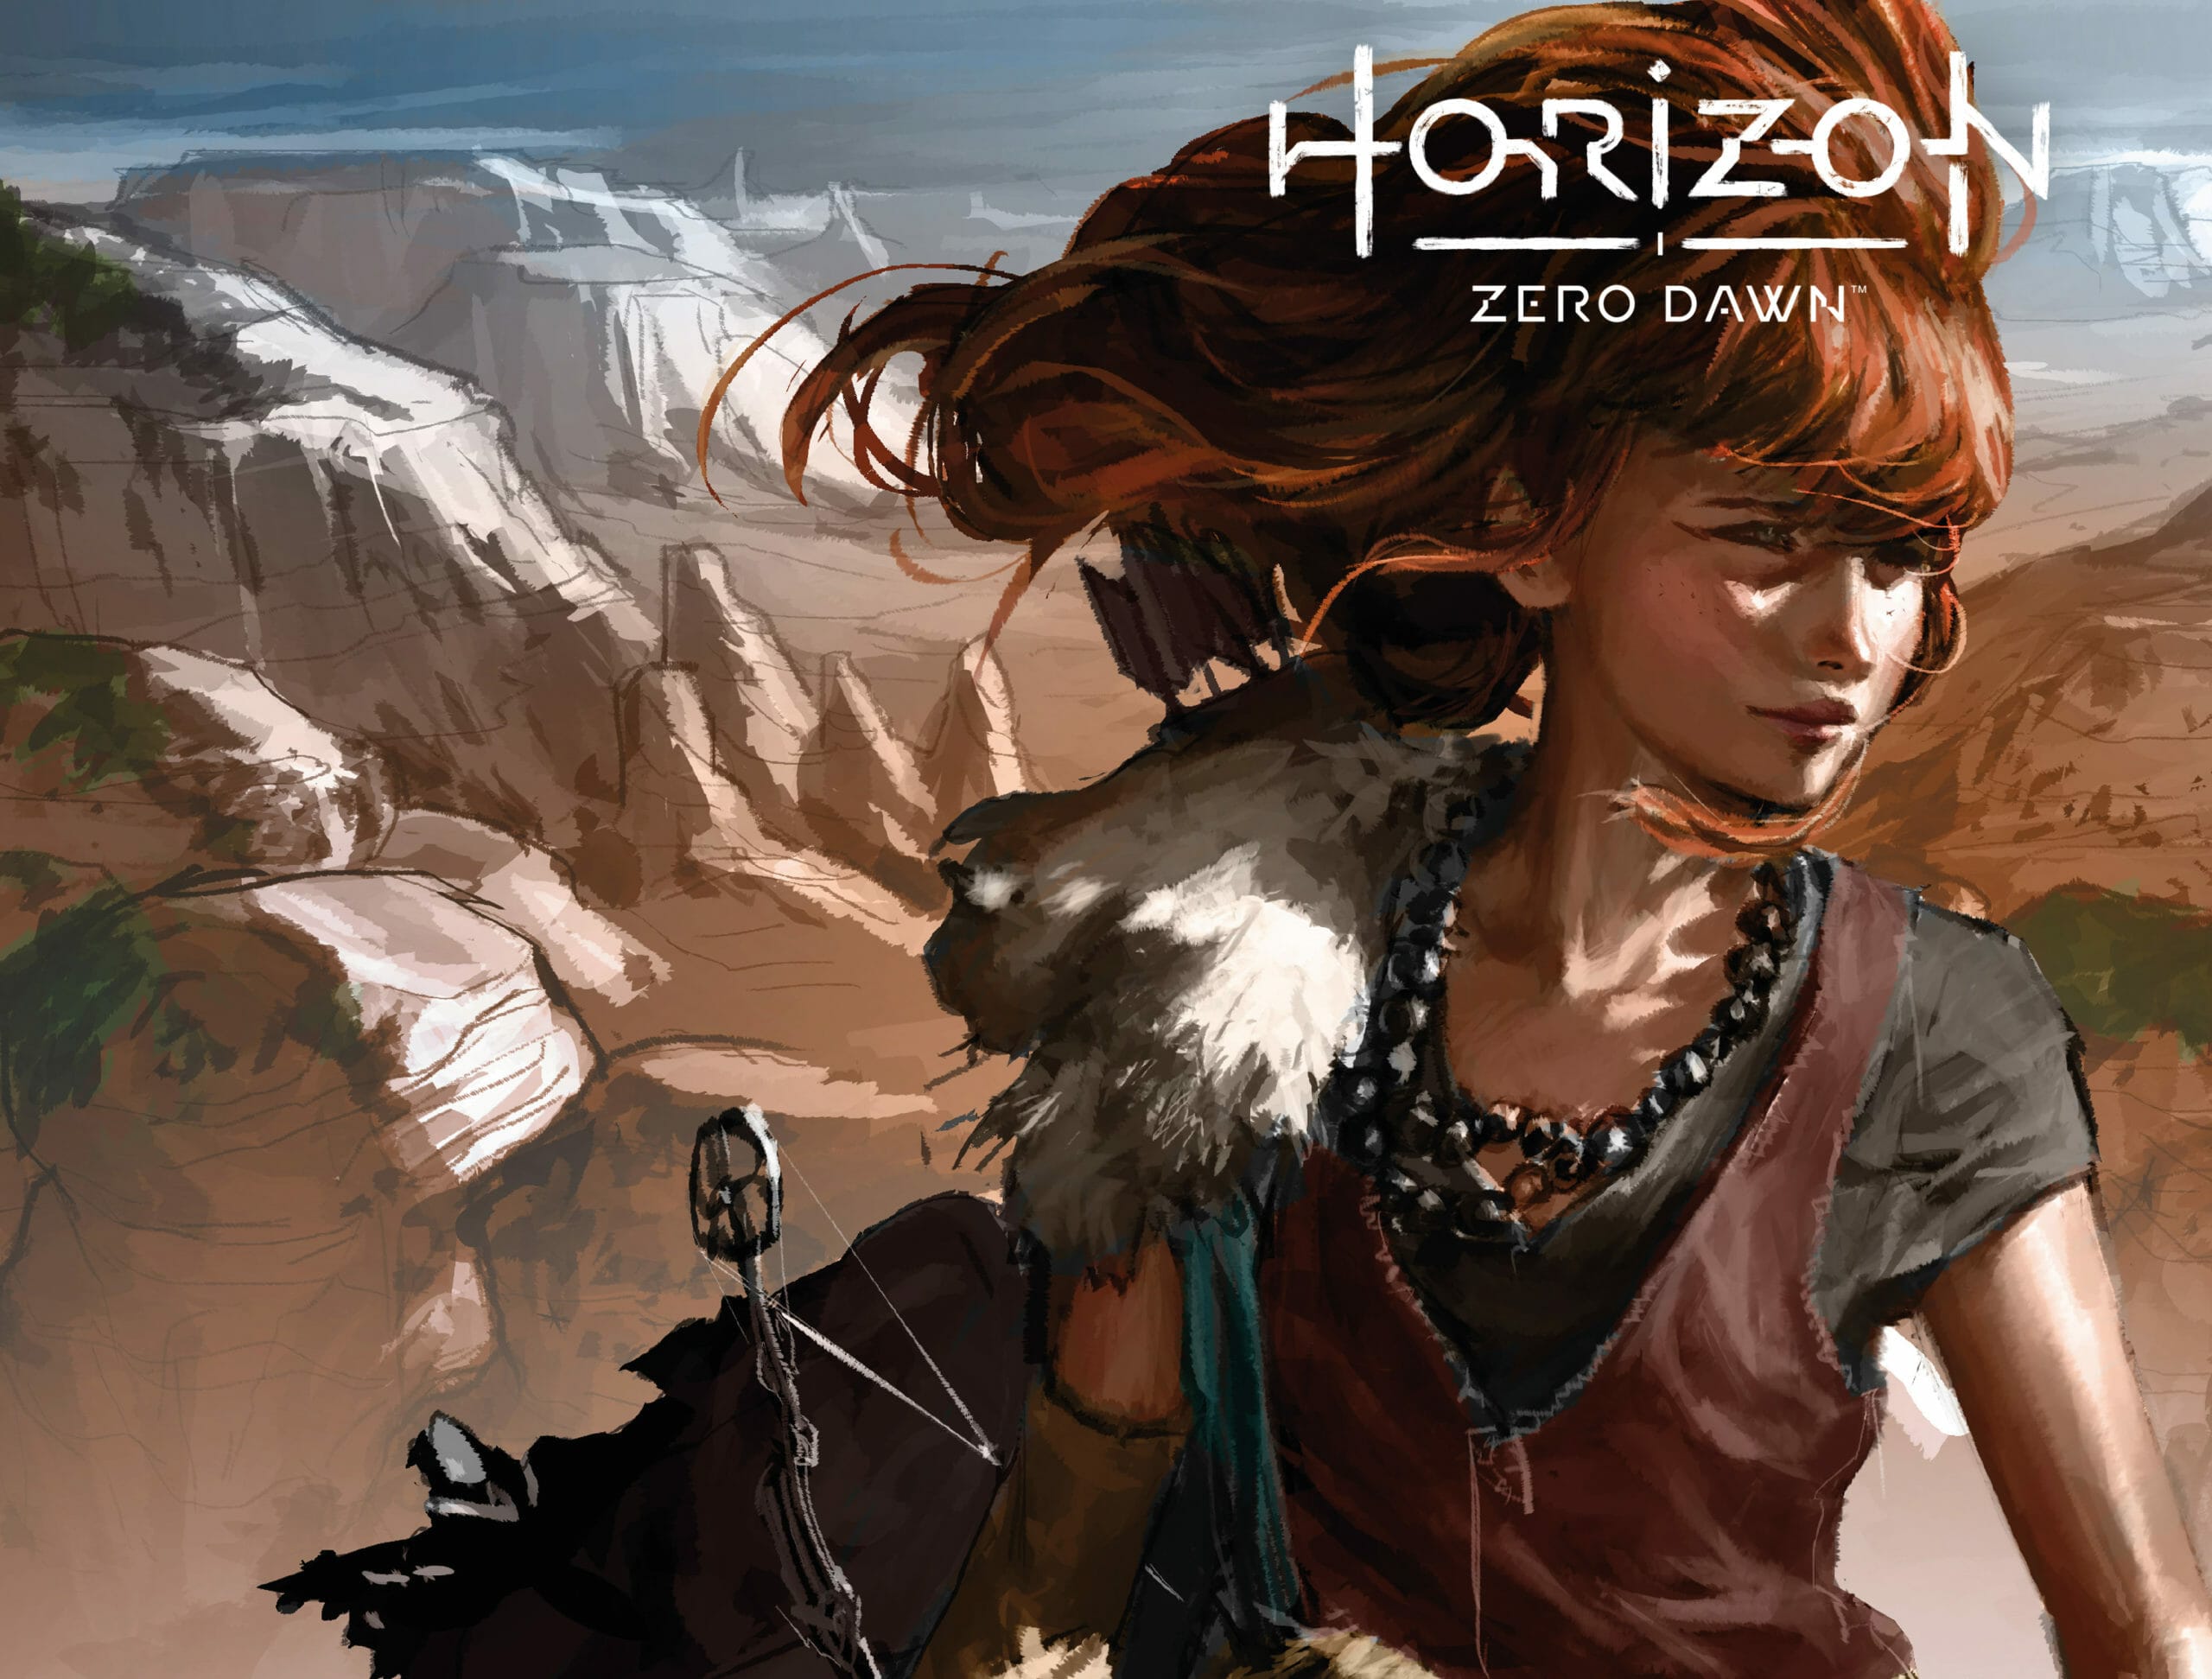 Horizon Zero Dawn Open World Gameplay Trailer (video) - Geeky Gadgets